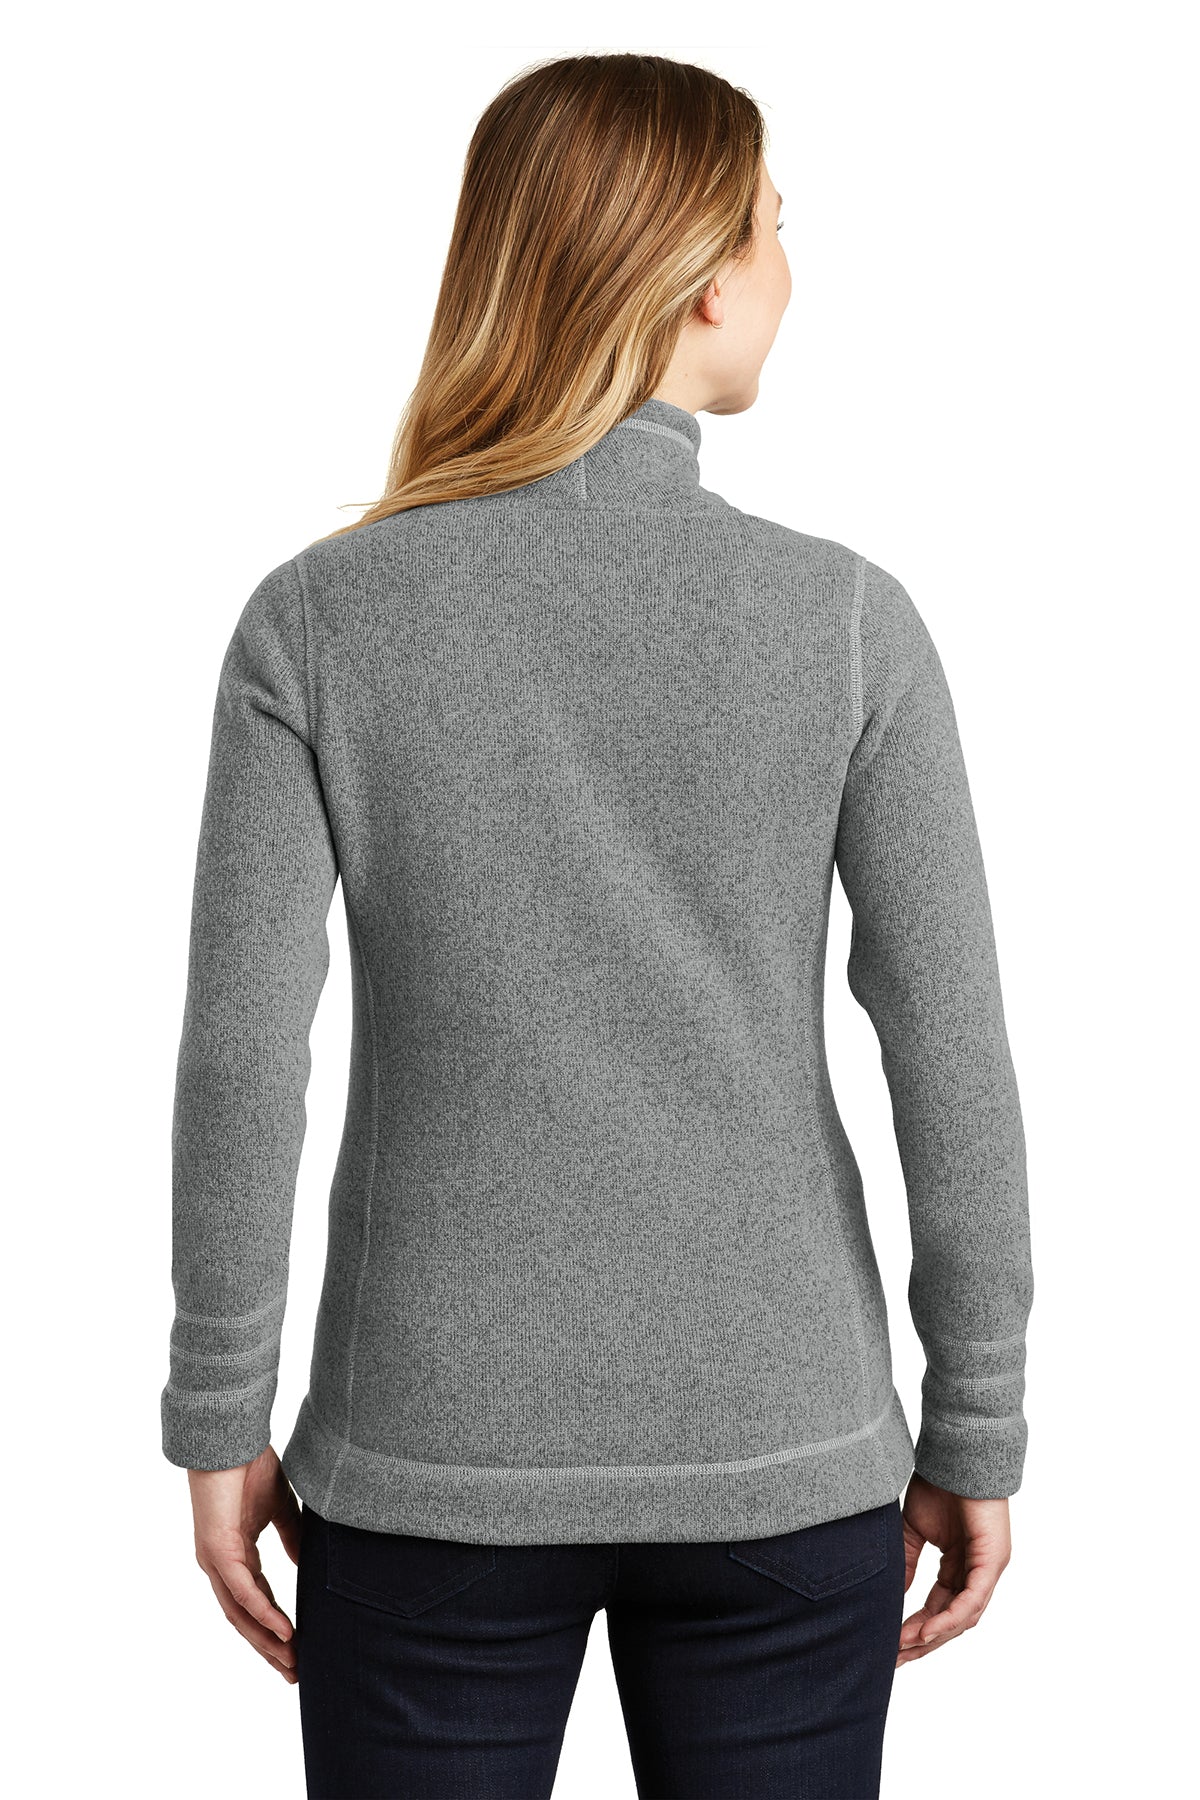 Branded North Face Ladies Sweater Fleece Medium Grey